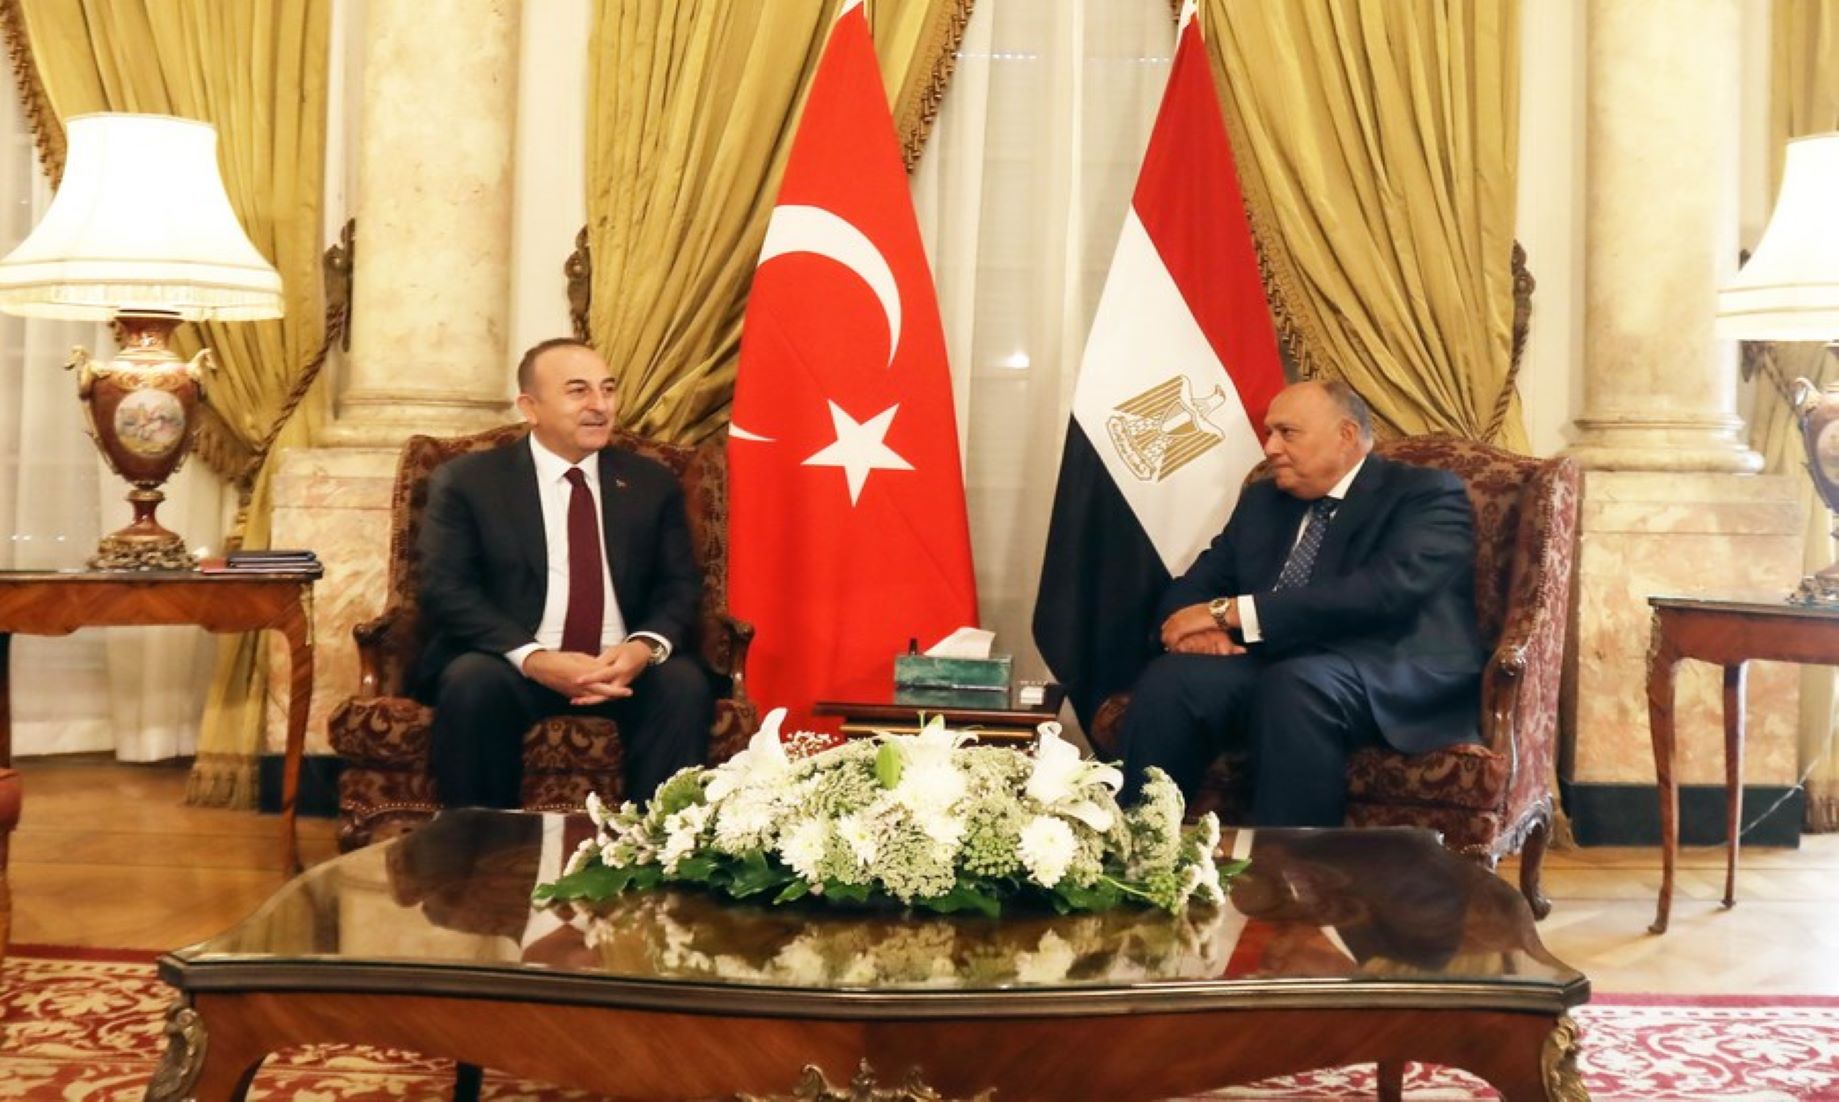 Egypt, Türkiye Have Political Will To Restore Ties: Egyptian FM